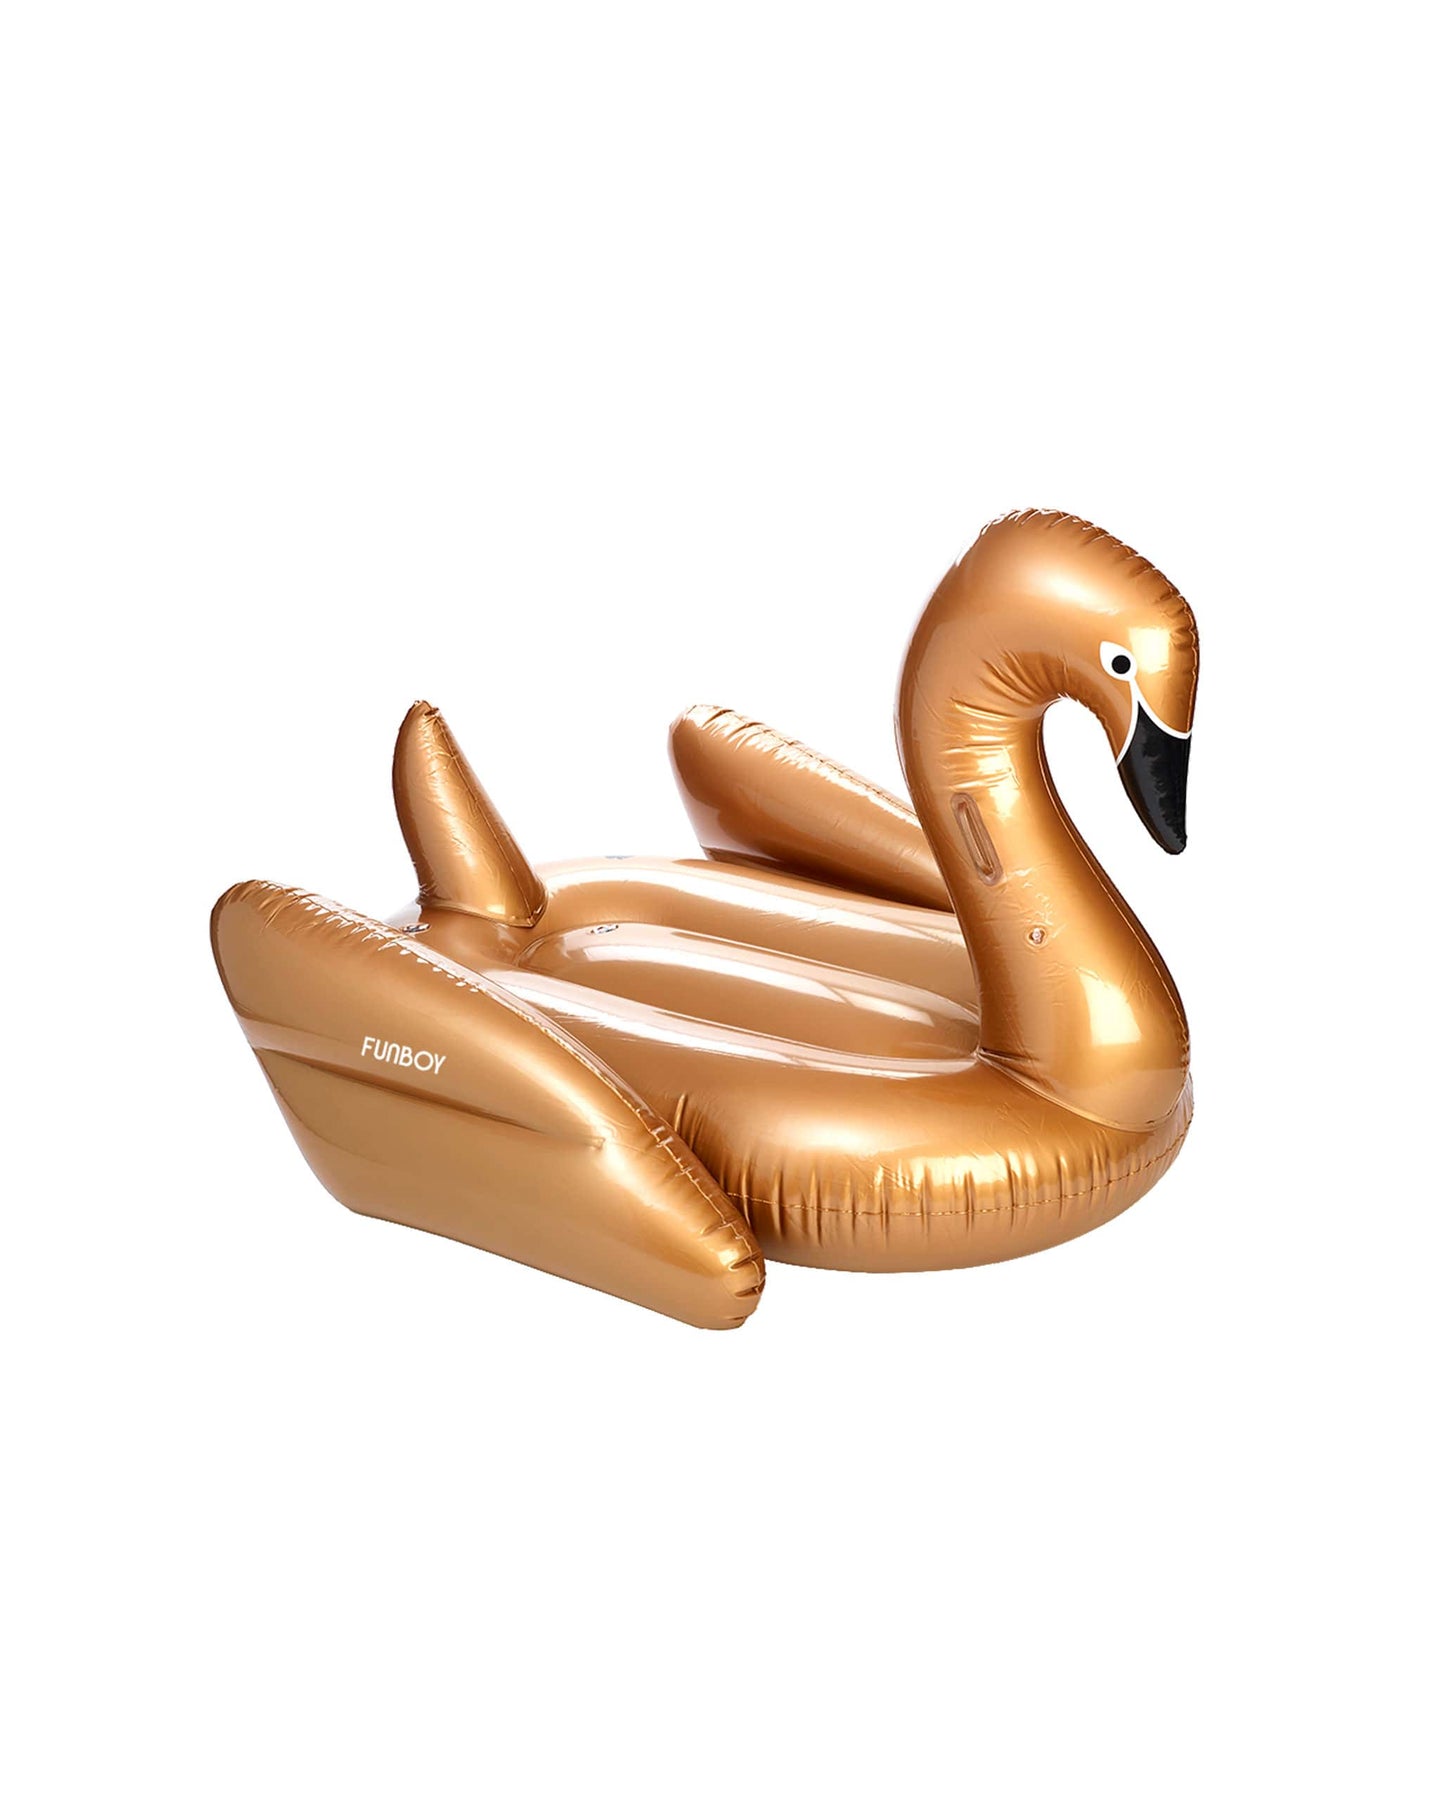 2022 Best Pool Floats - Gold Swan